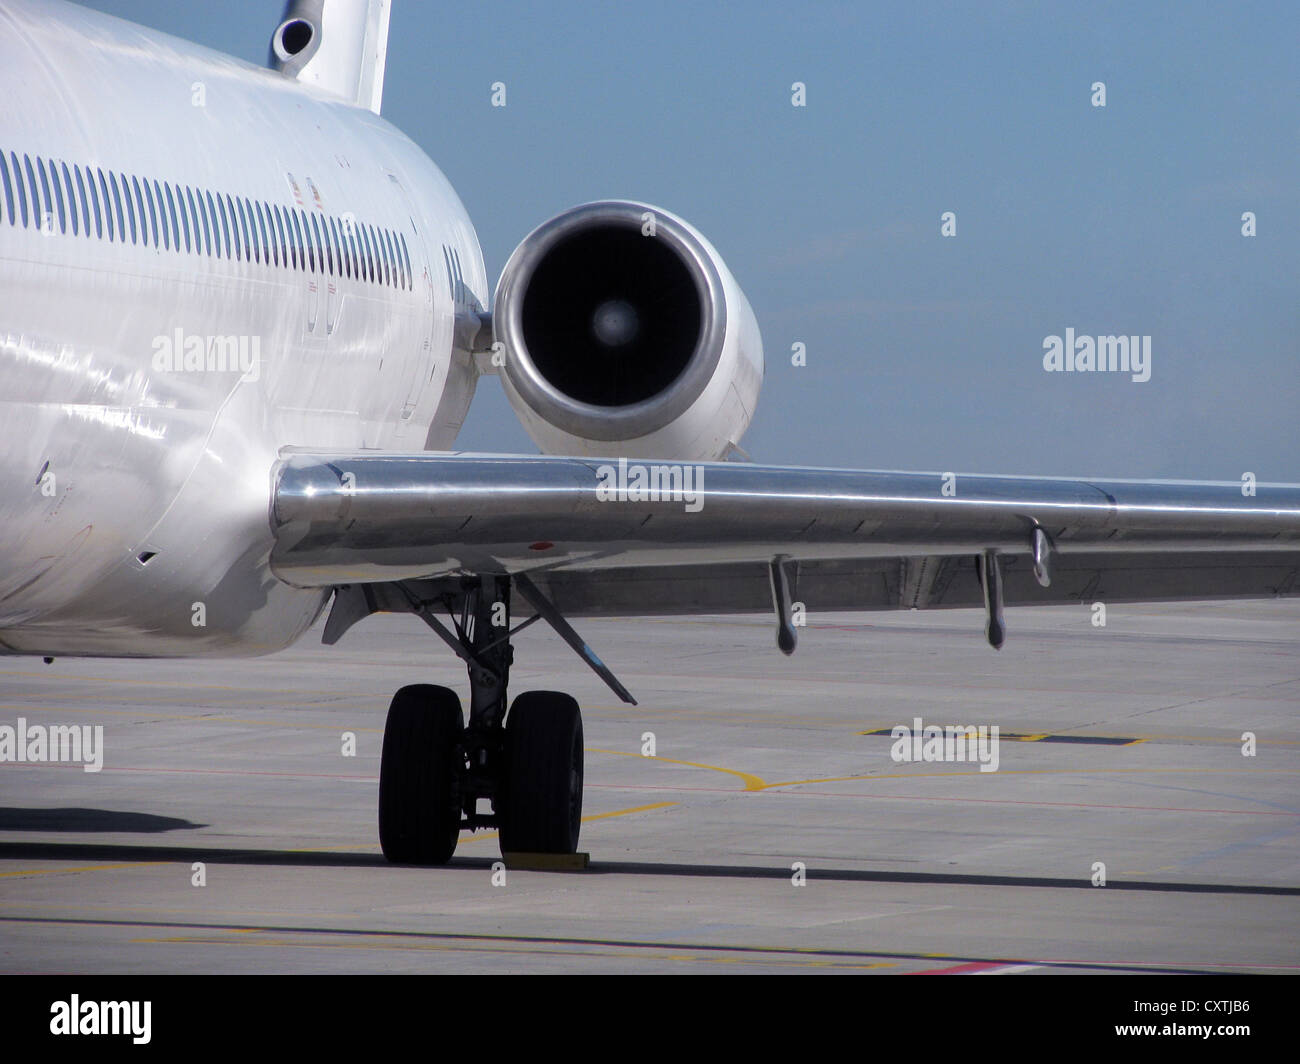 turbine engine of airplane standing in airport Stock Photo